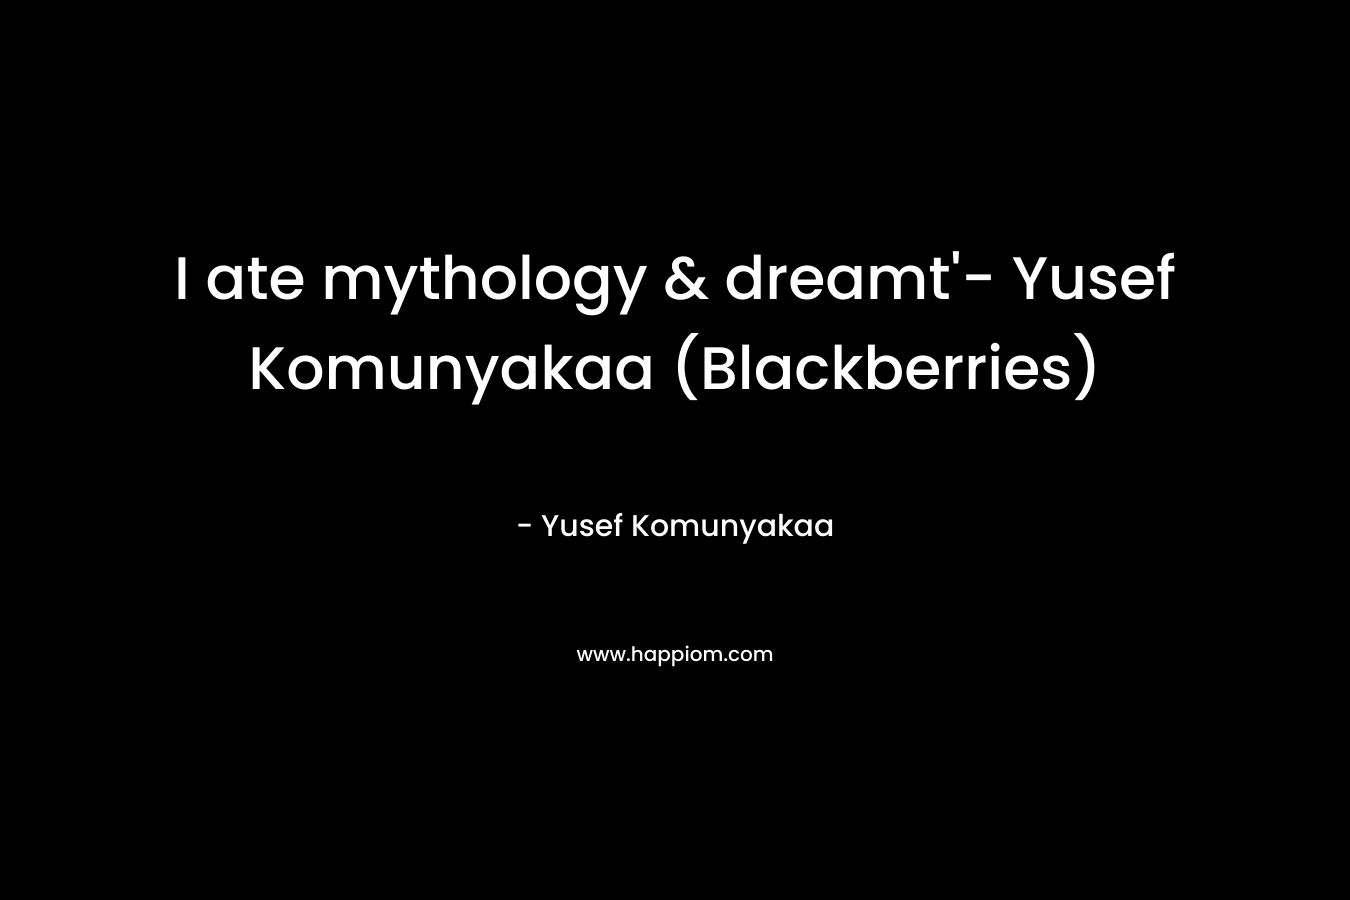 I ate mythology & dreamt'- Yusef Komunyakaa (Blackberries)